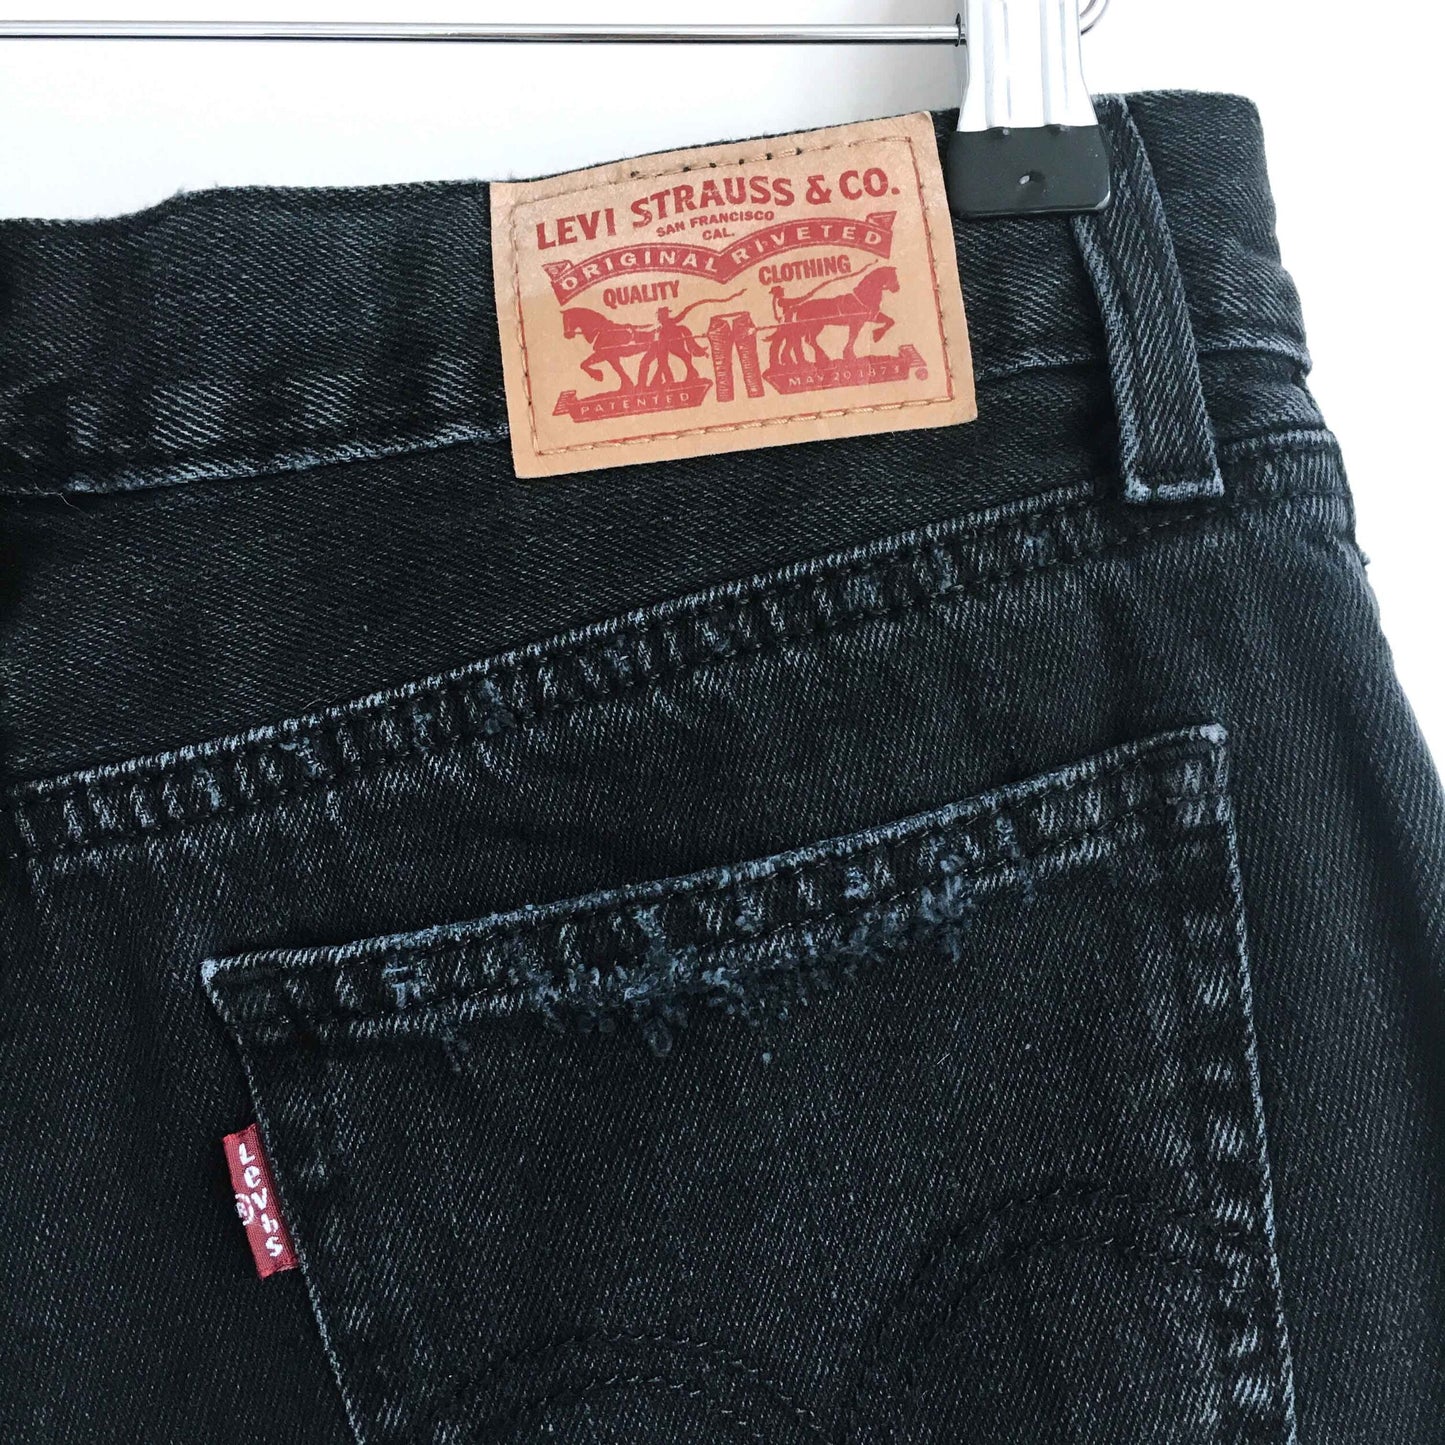 Levi's cut-off jean shorts - size 25